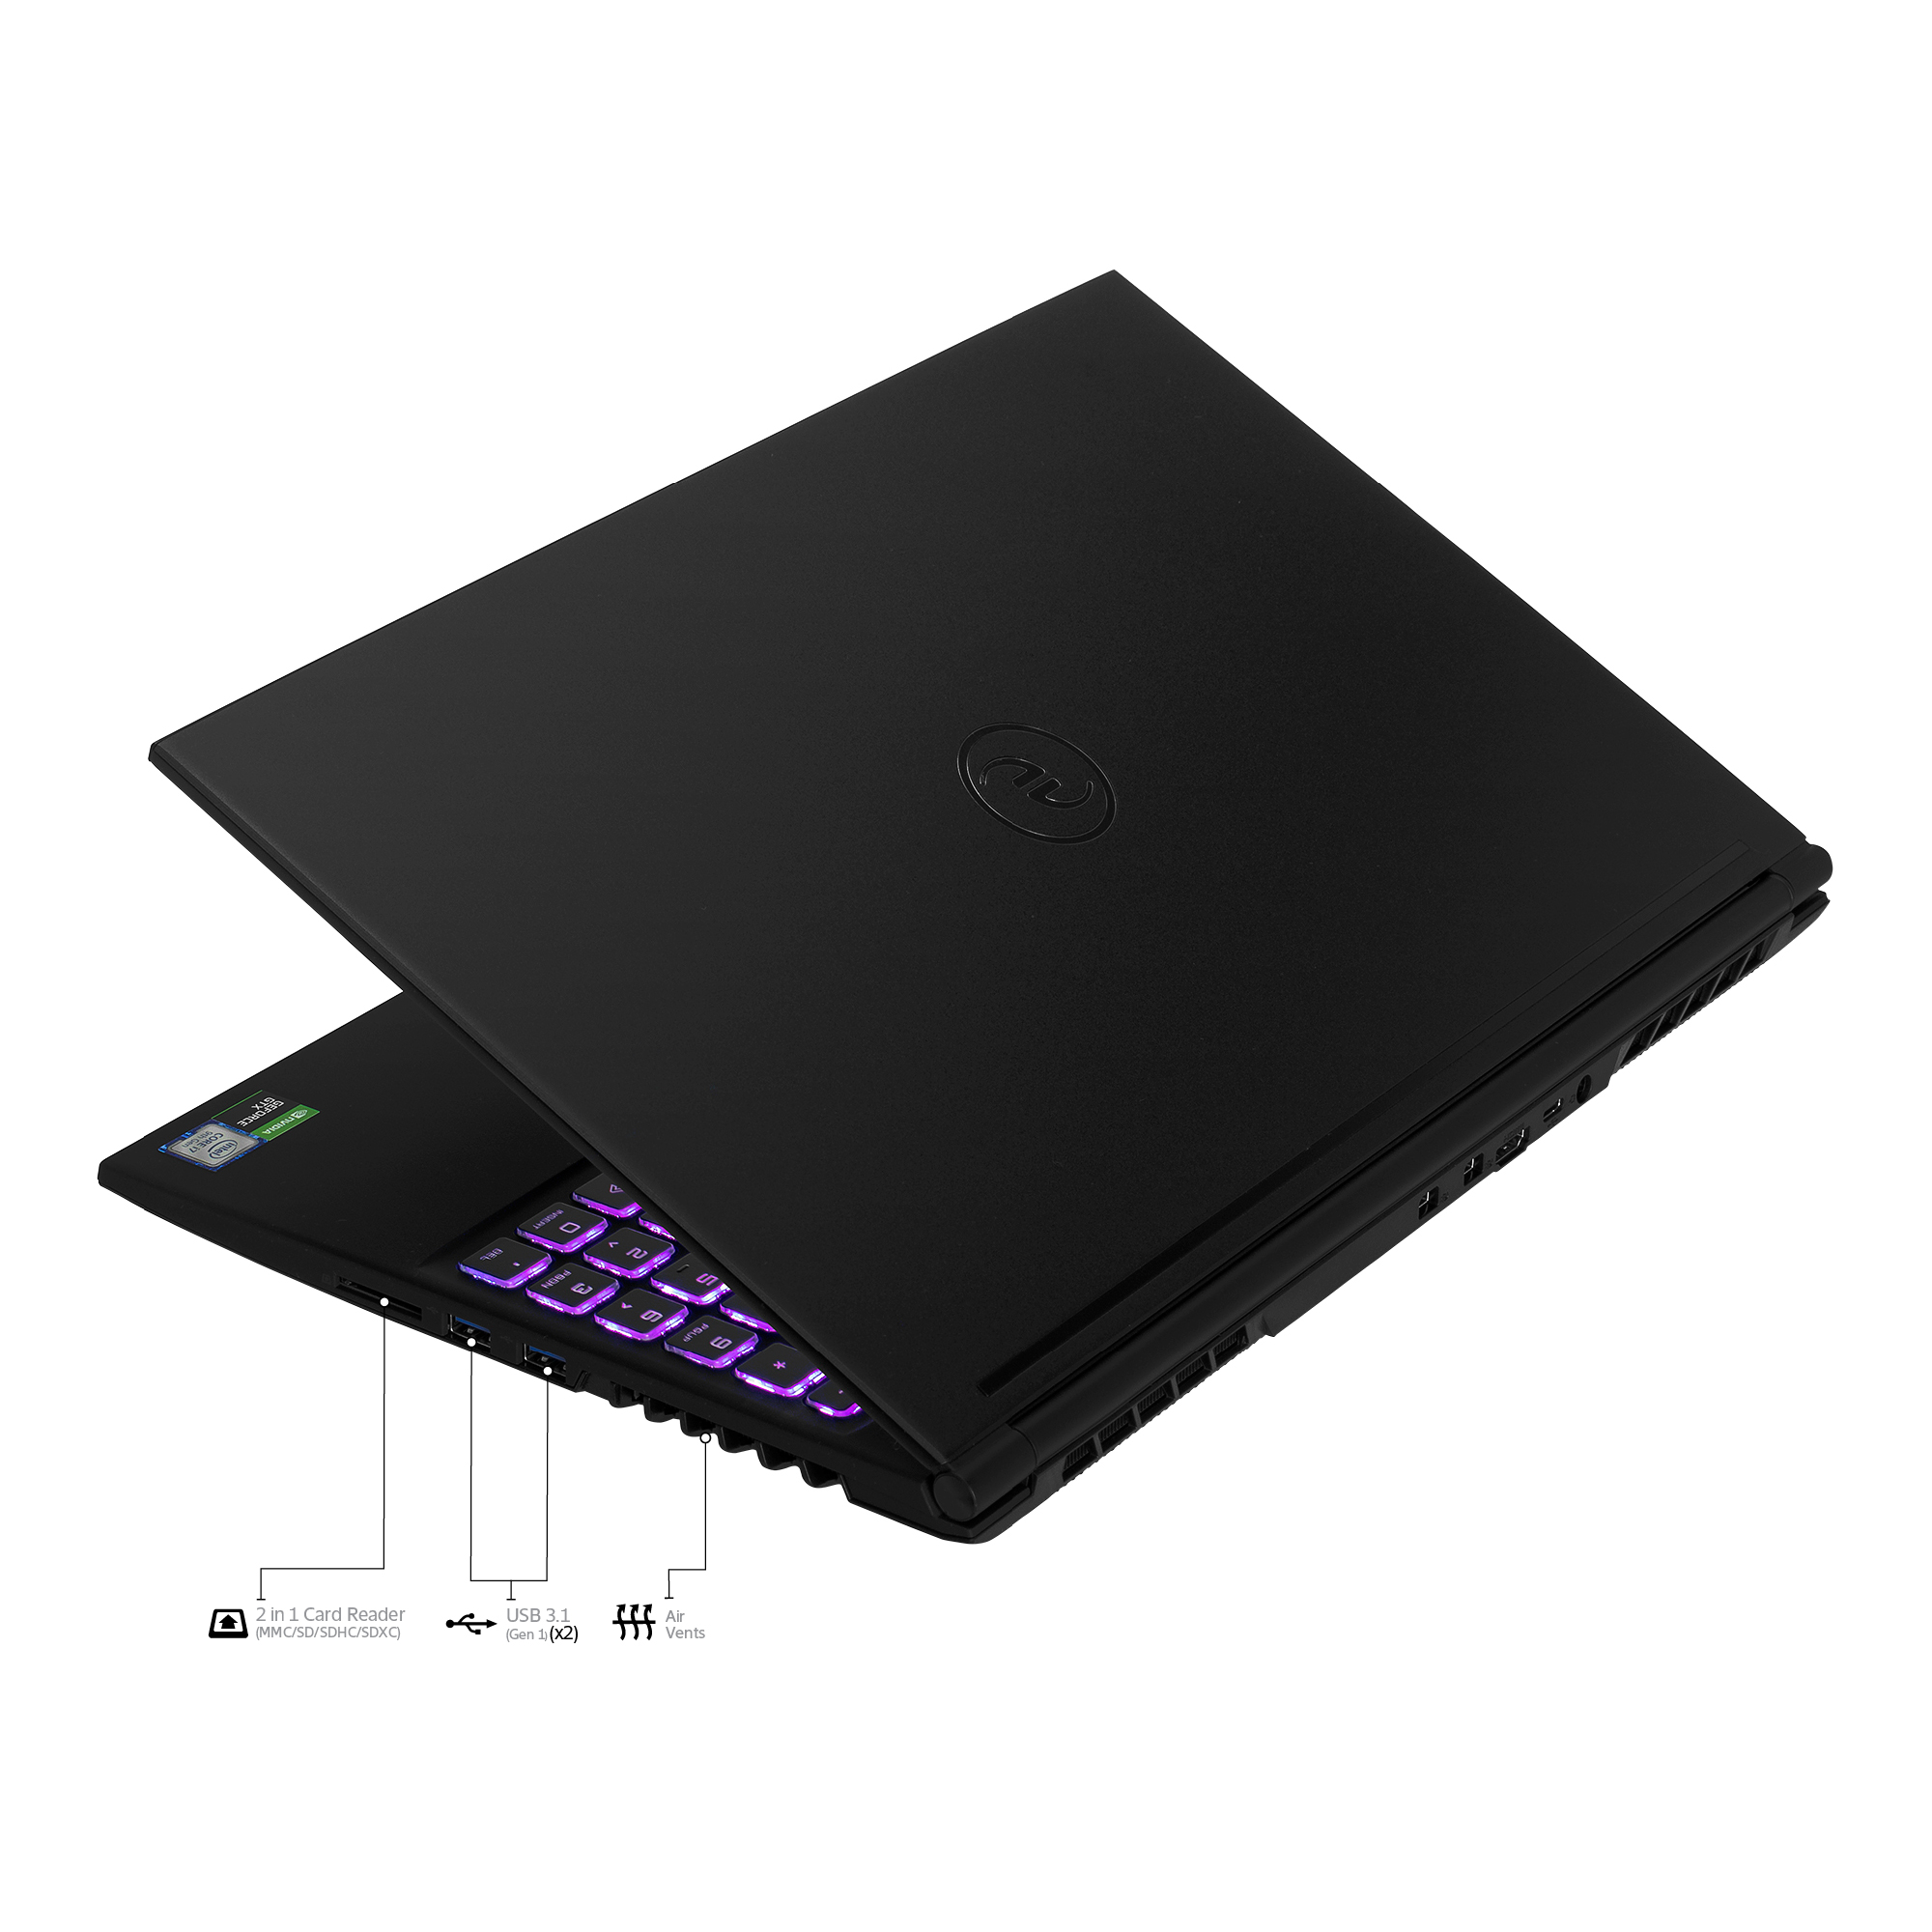 EVOO Gaming Laptop 15" FHD 144Hz Display, THX Spatial Audio, Tuned by THX Display, 9th Gen Intel i7-9750H, Nvidia GTX 1650, 256GB SSD, 16GB Memory, Windows 10 Home, Black - image 4 of 11